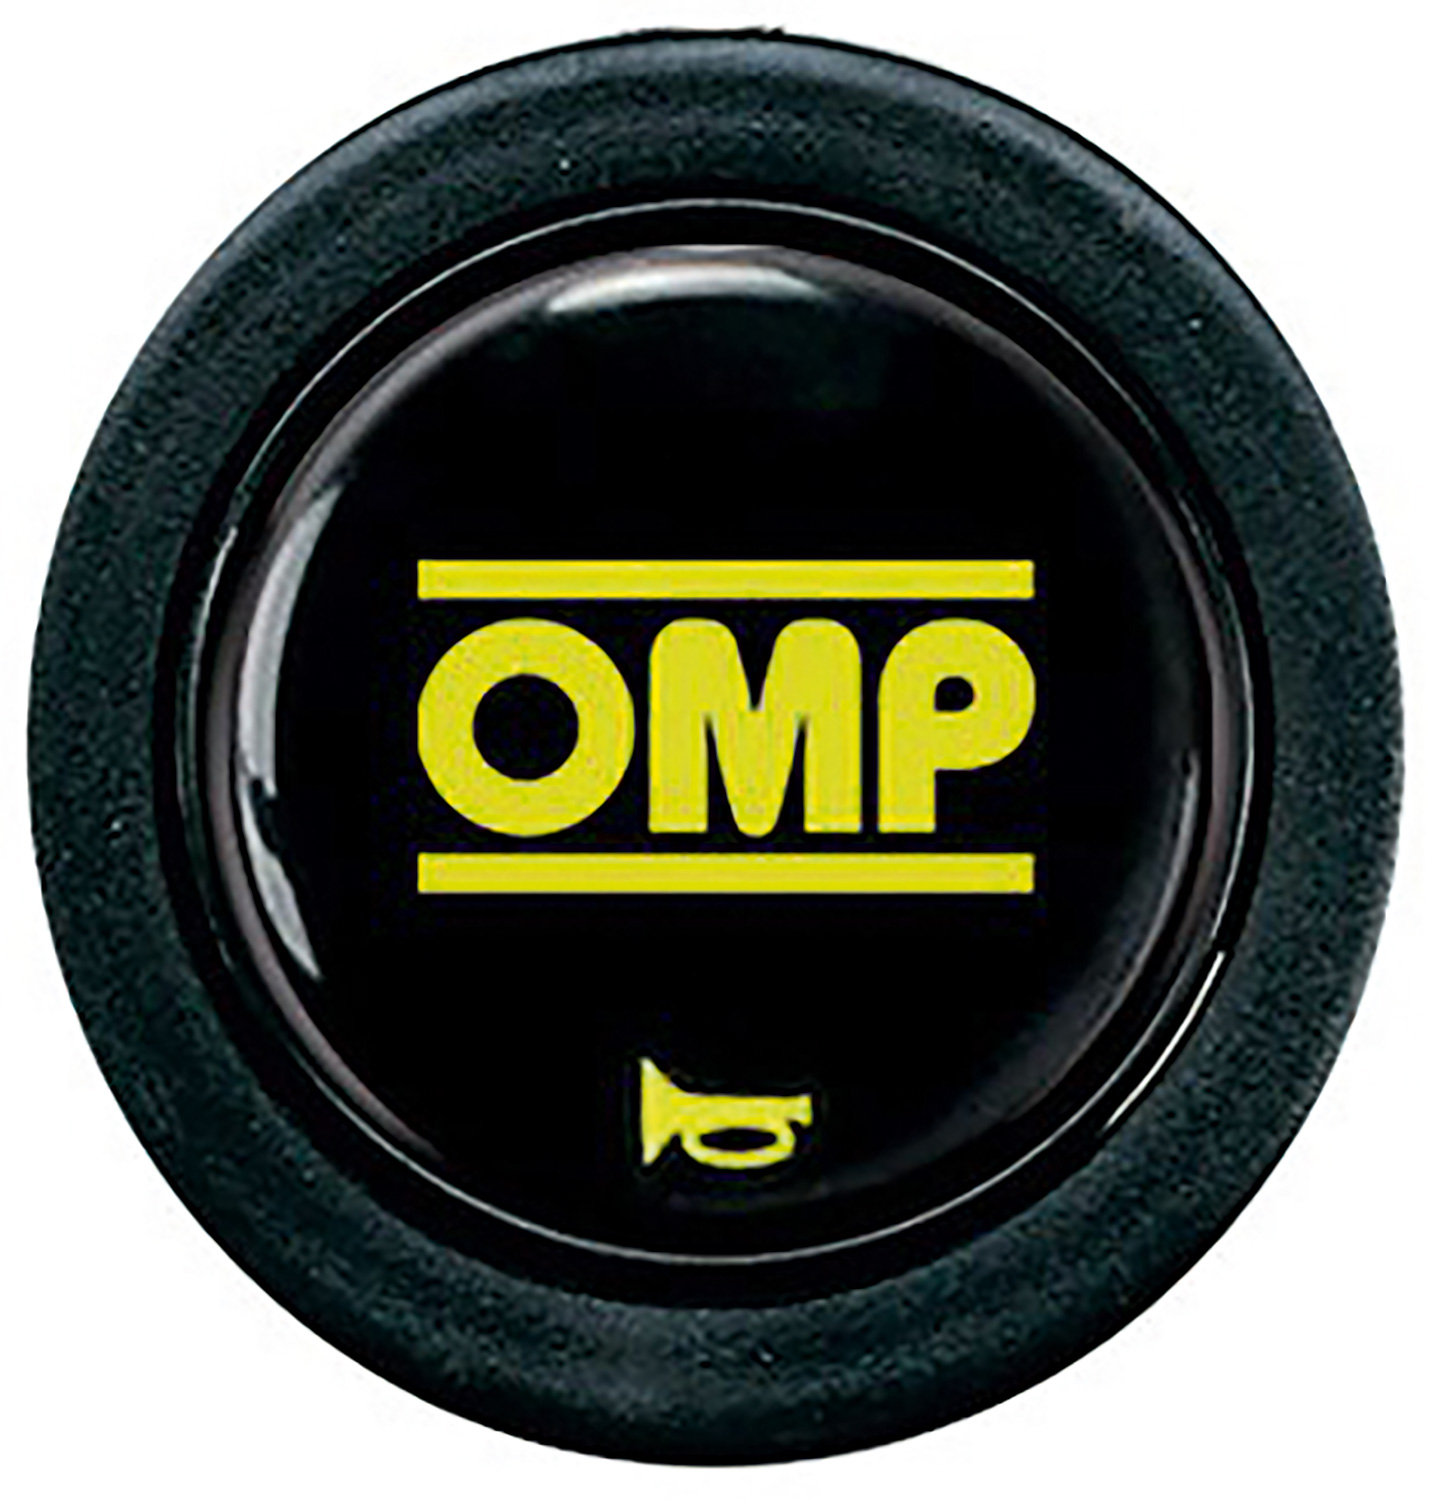 OMP Hupenknopf, schwarz/gelb